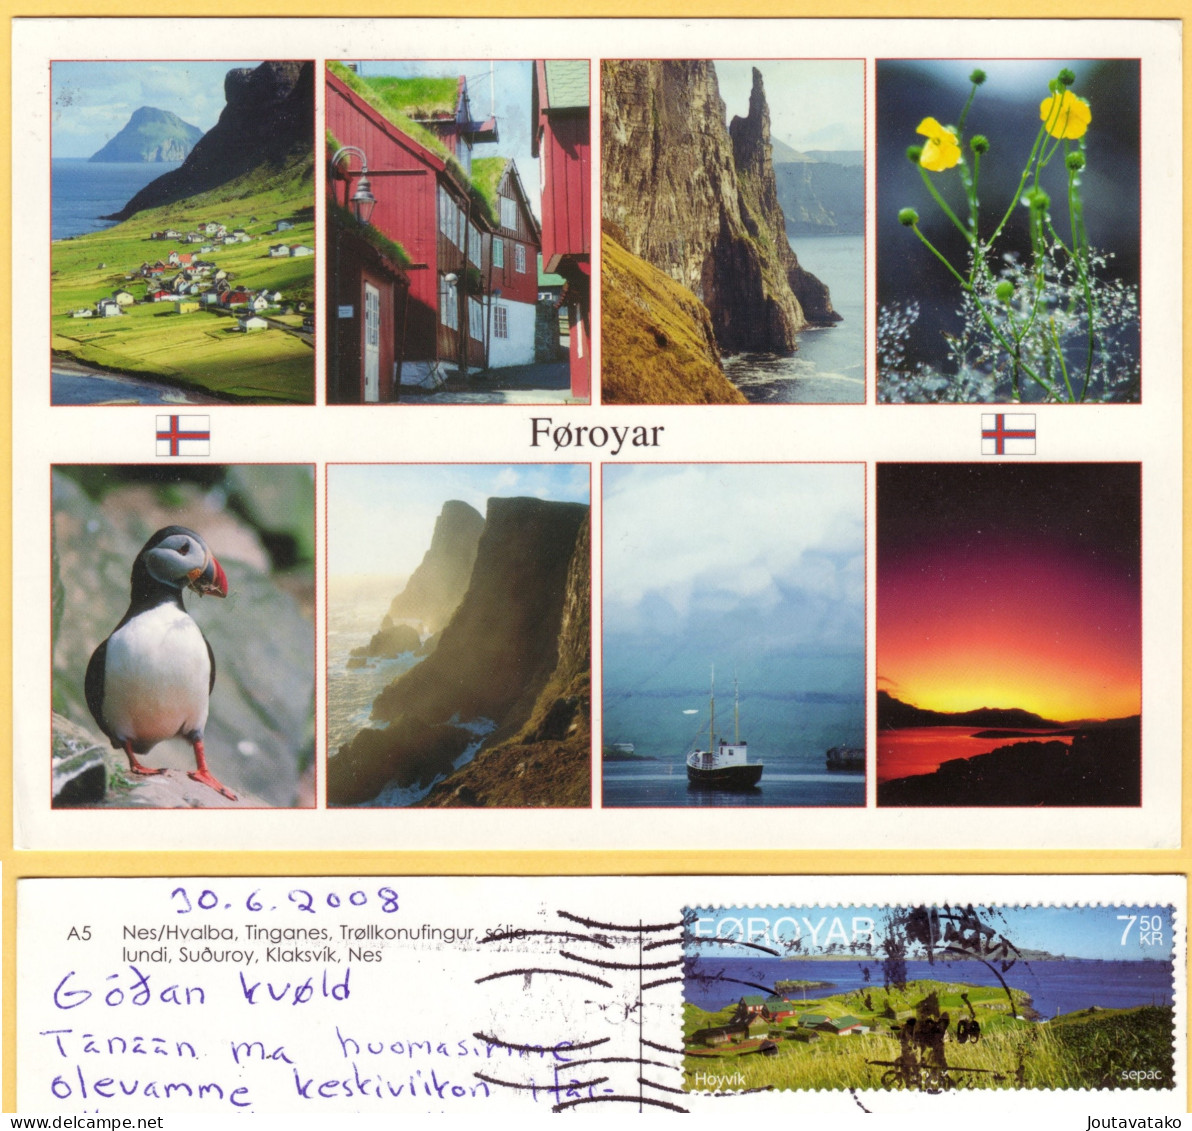 Faroe Islands - Føroyar -Sepac 2007 Stamp Mi 623 - Faroe Islands